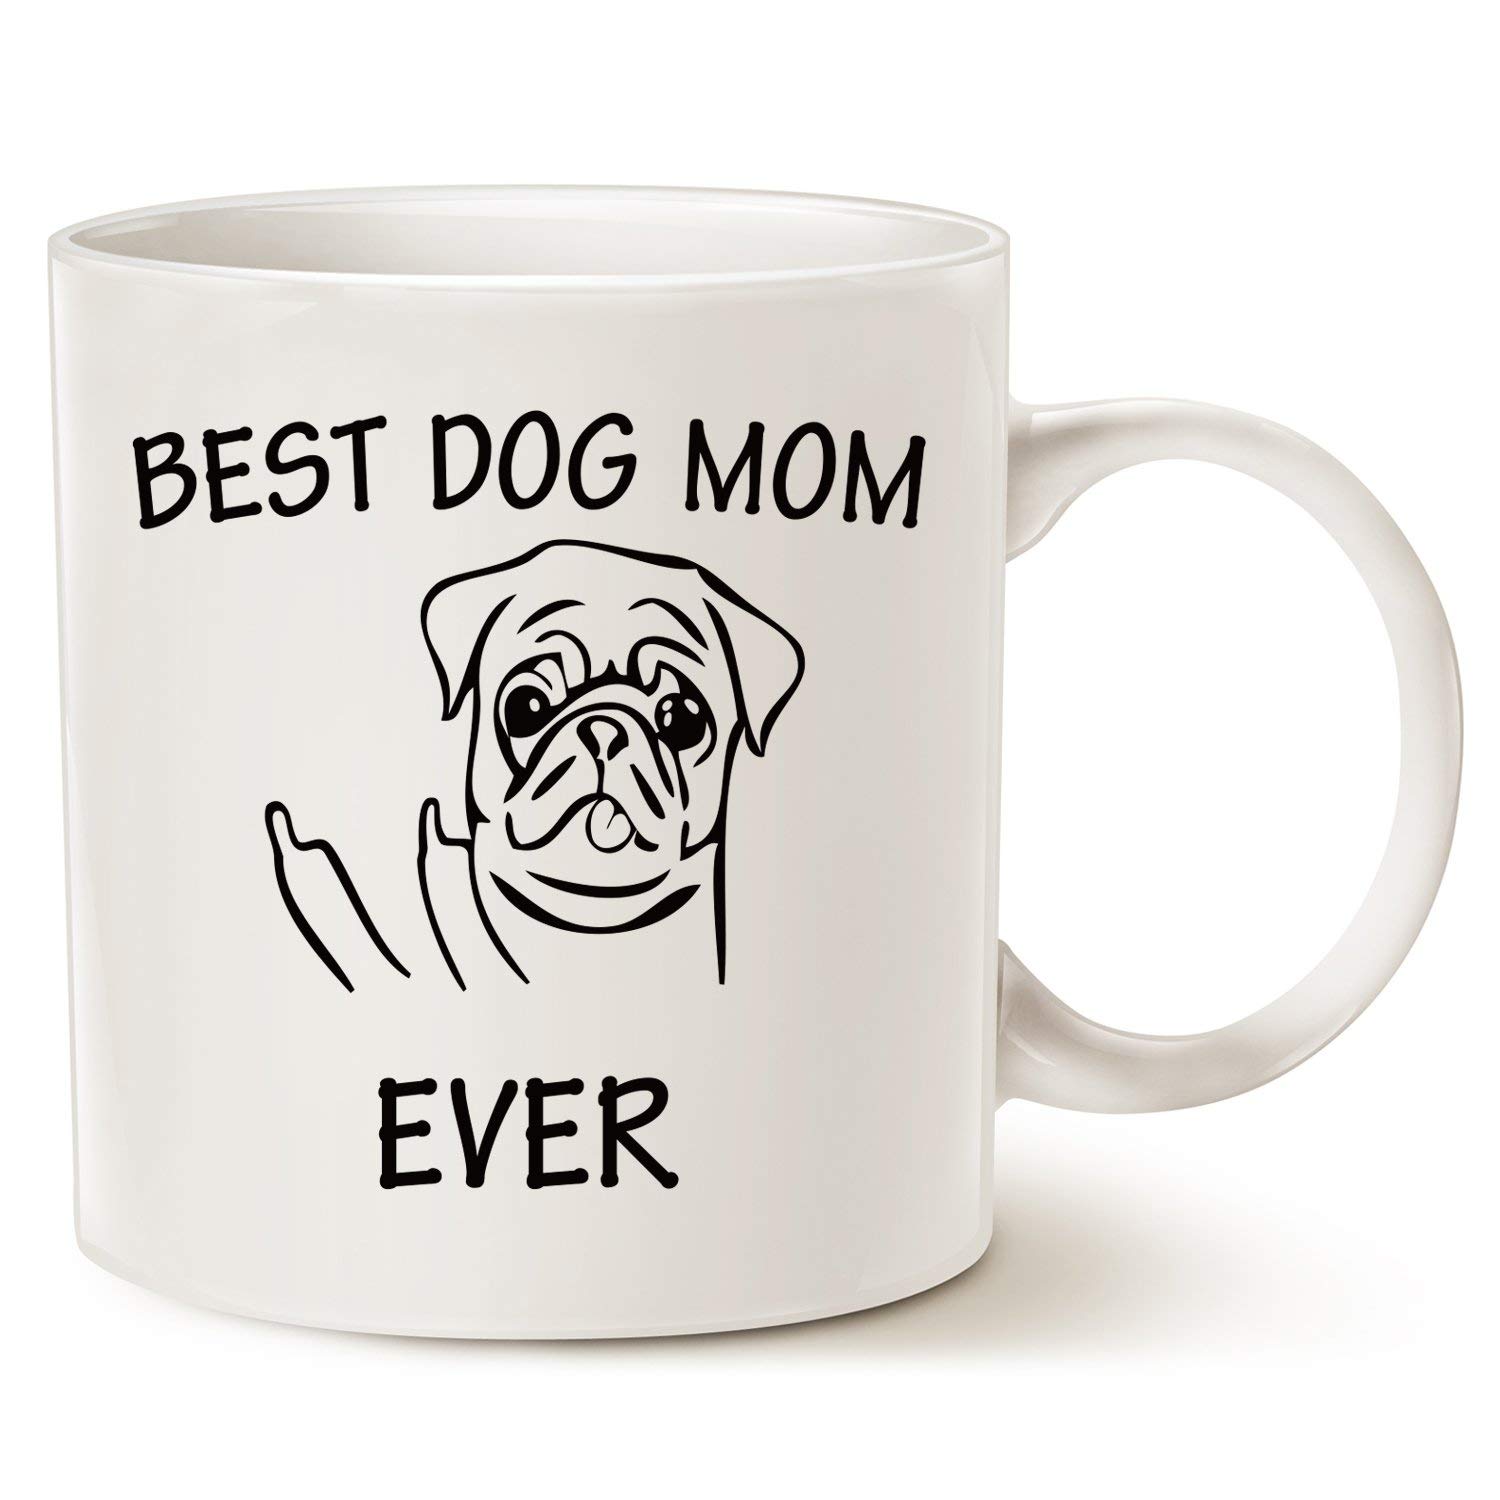 A white mug printed with - Best dog mom ever